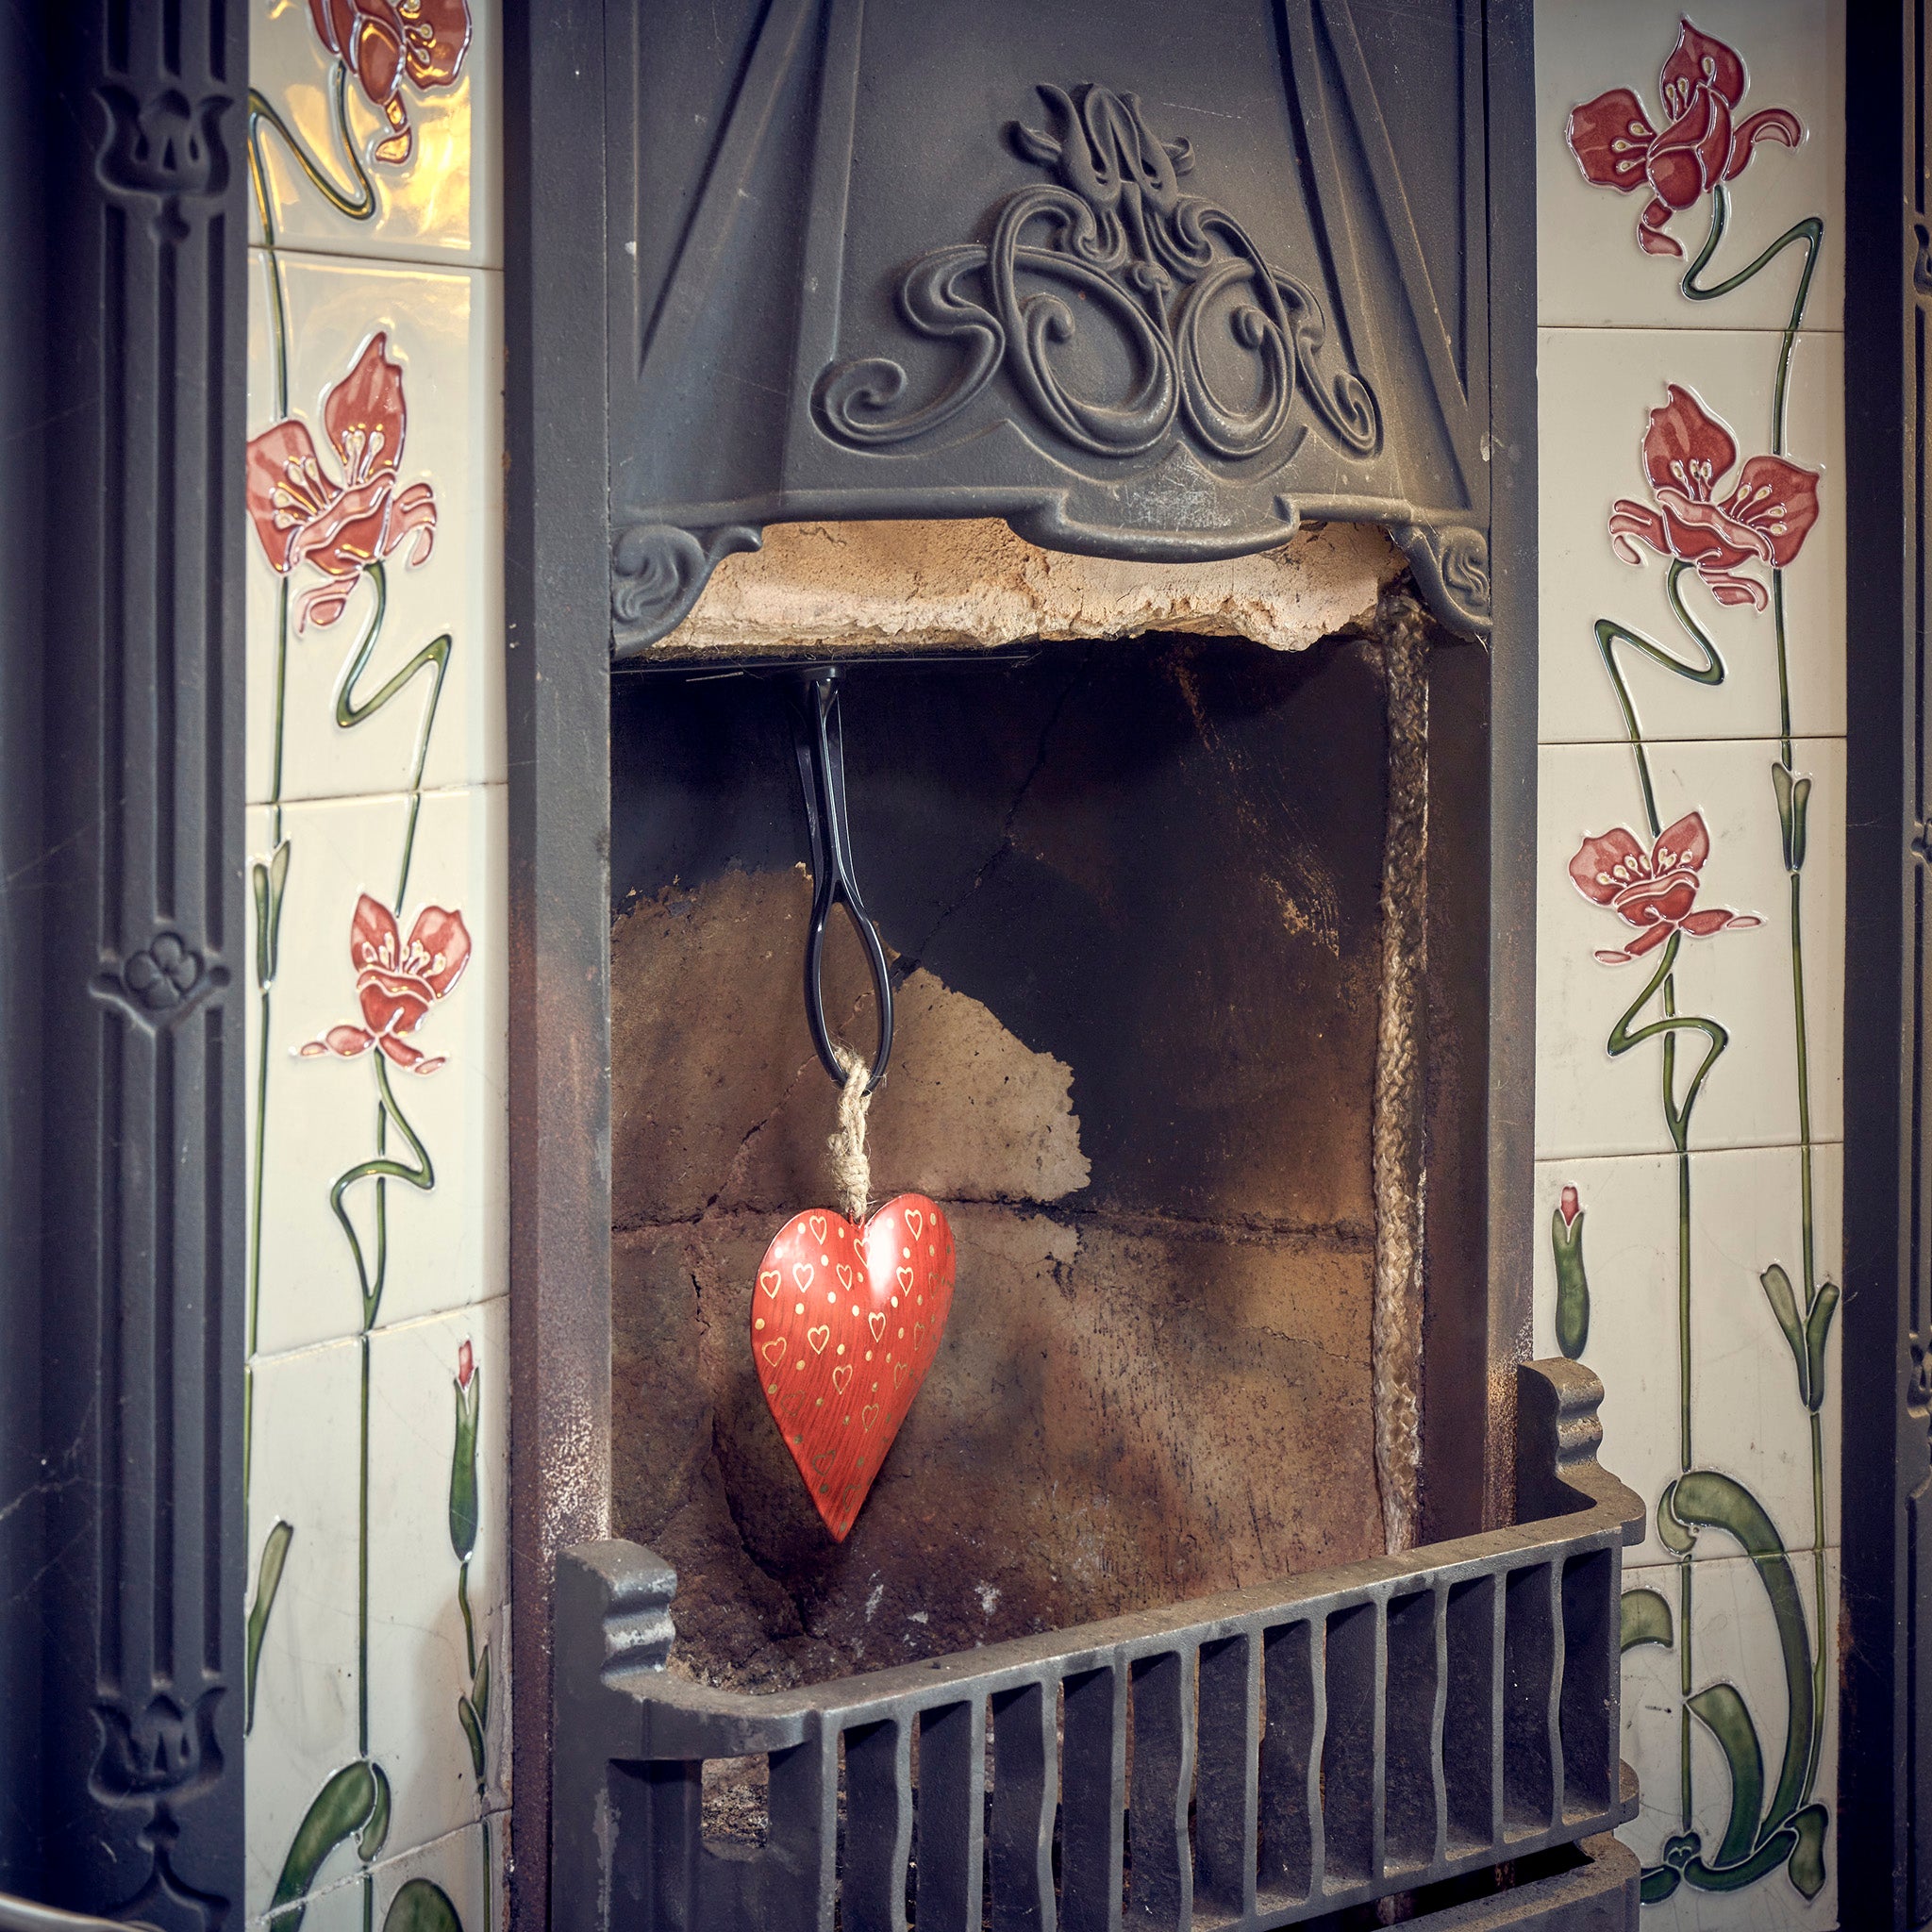 Namaste red metal heart in fireplace